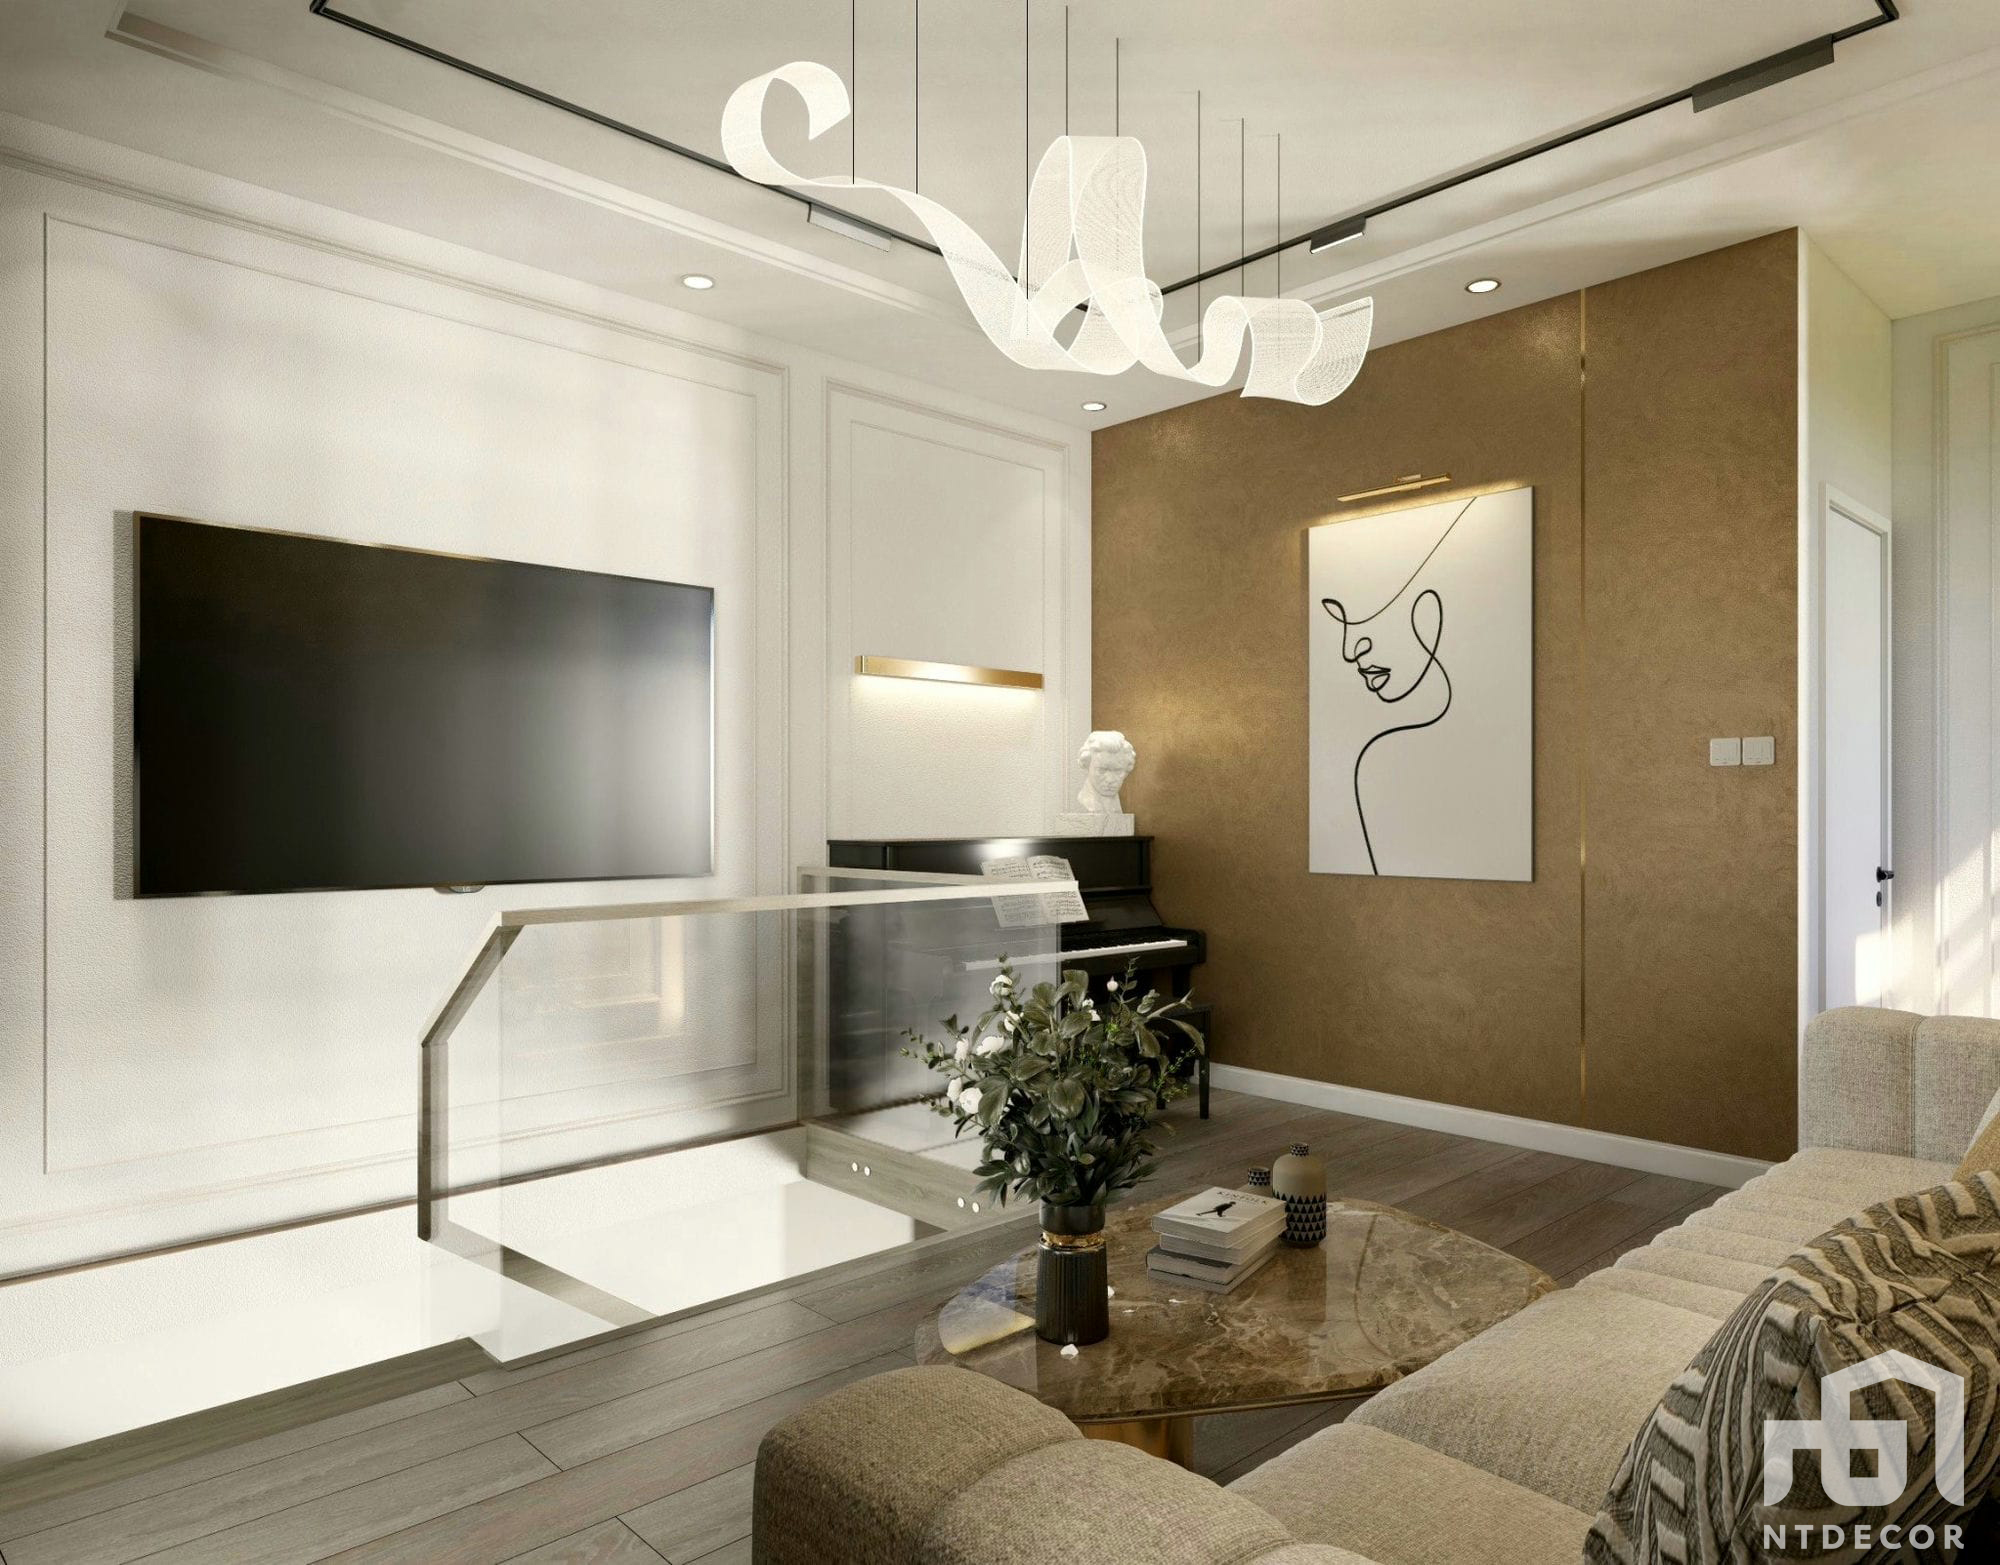 Living Room 3D Design of Van An's House Interior Design Modern Style | NTDecor